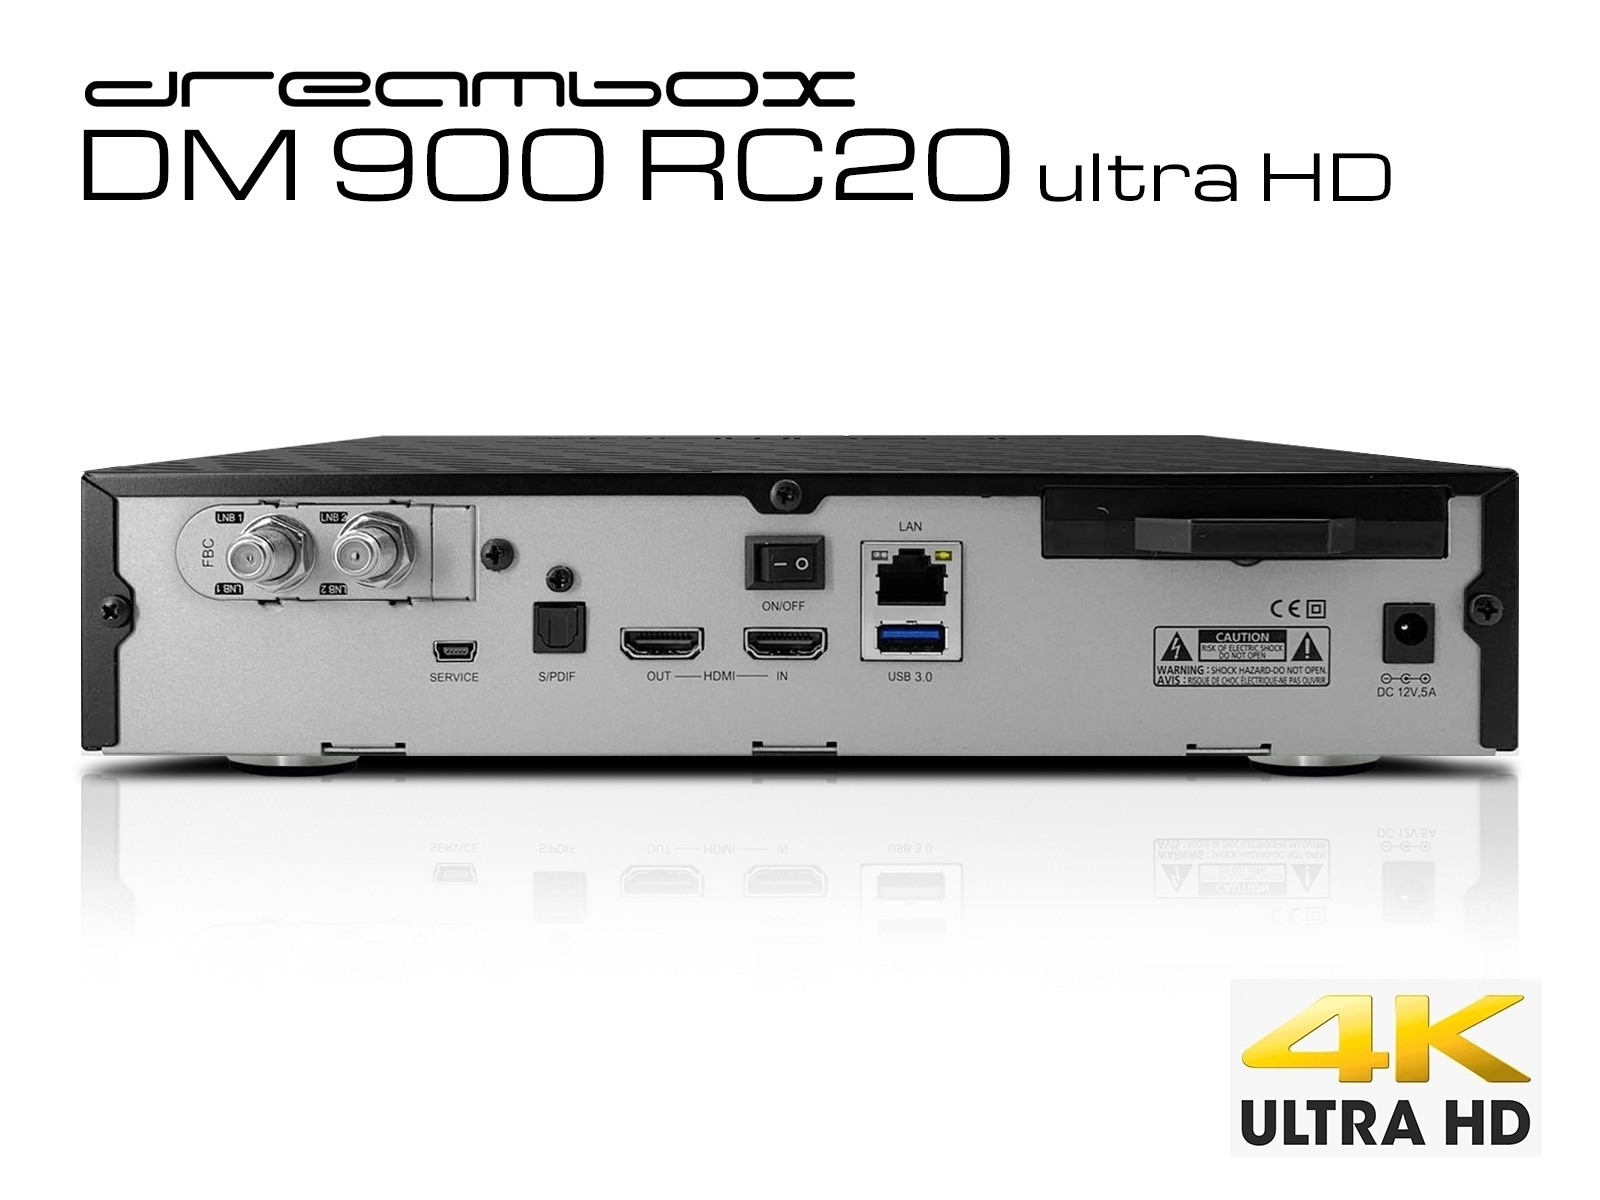 Dreambox DM900 UHD 4K 1x DVB-S2X FBC MultiStream Tuner E2 Linux PVR Receiver